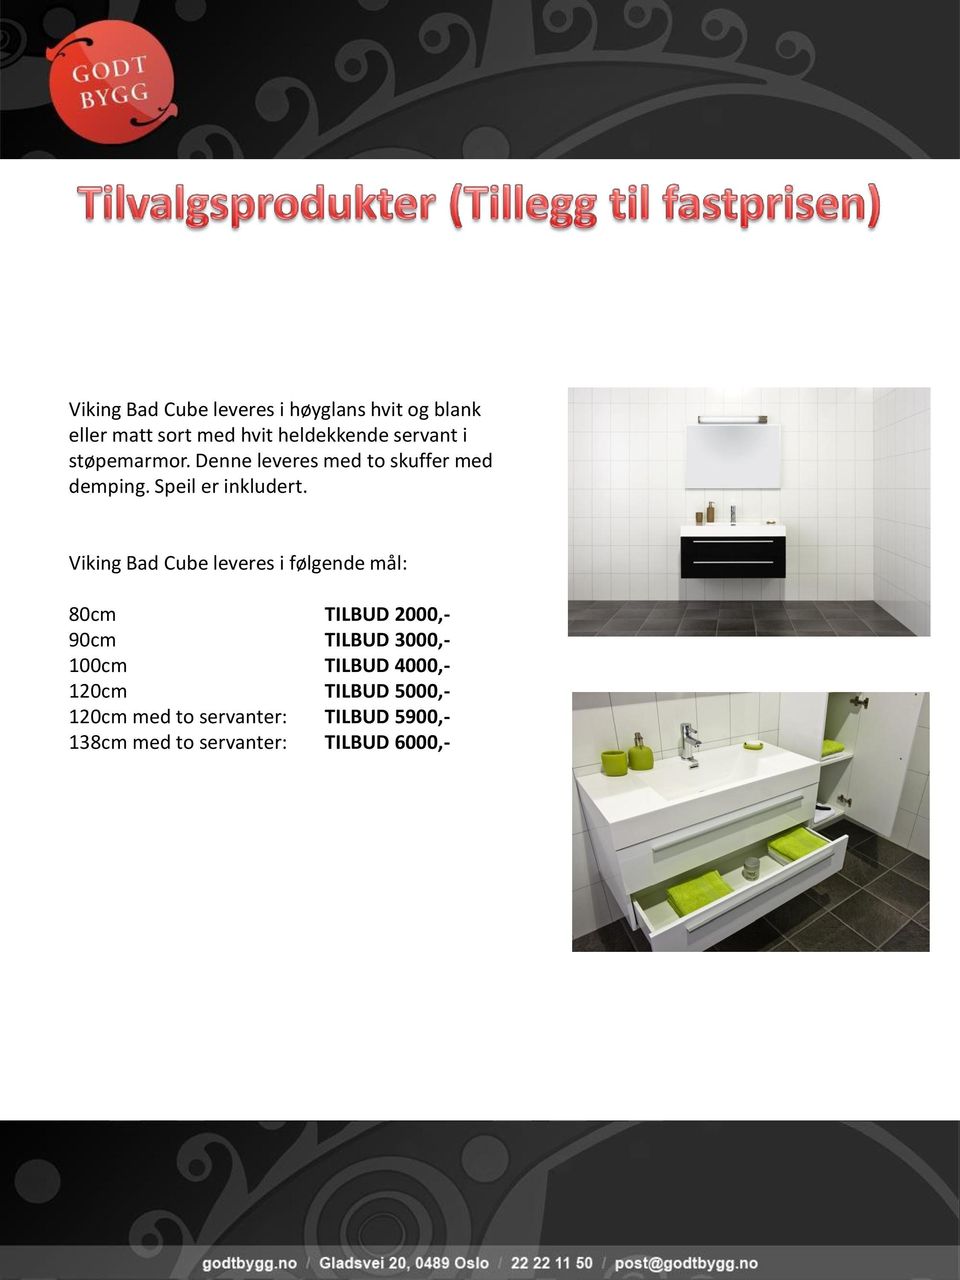 Viking Bad Cube leveres i følgende mål: 80cm TILBUD 2000,- 90cm TILBUD 3000,- 100cm TILBUD